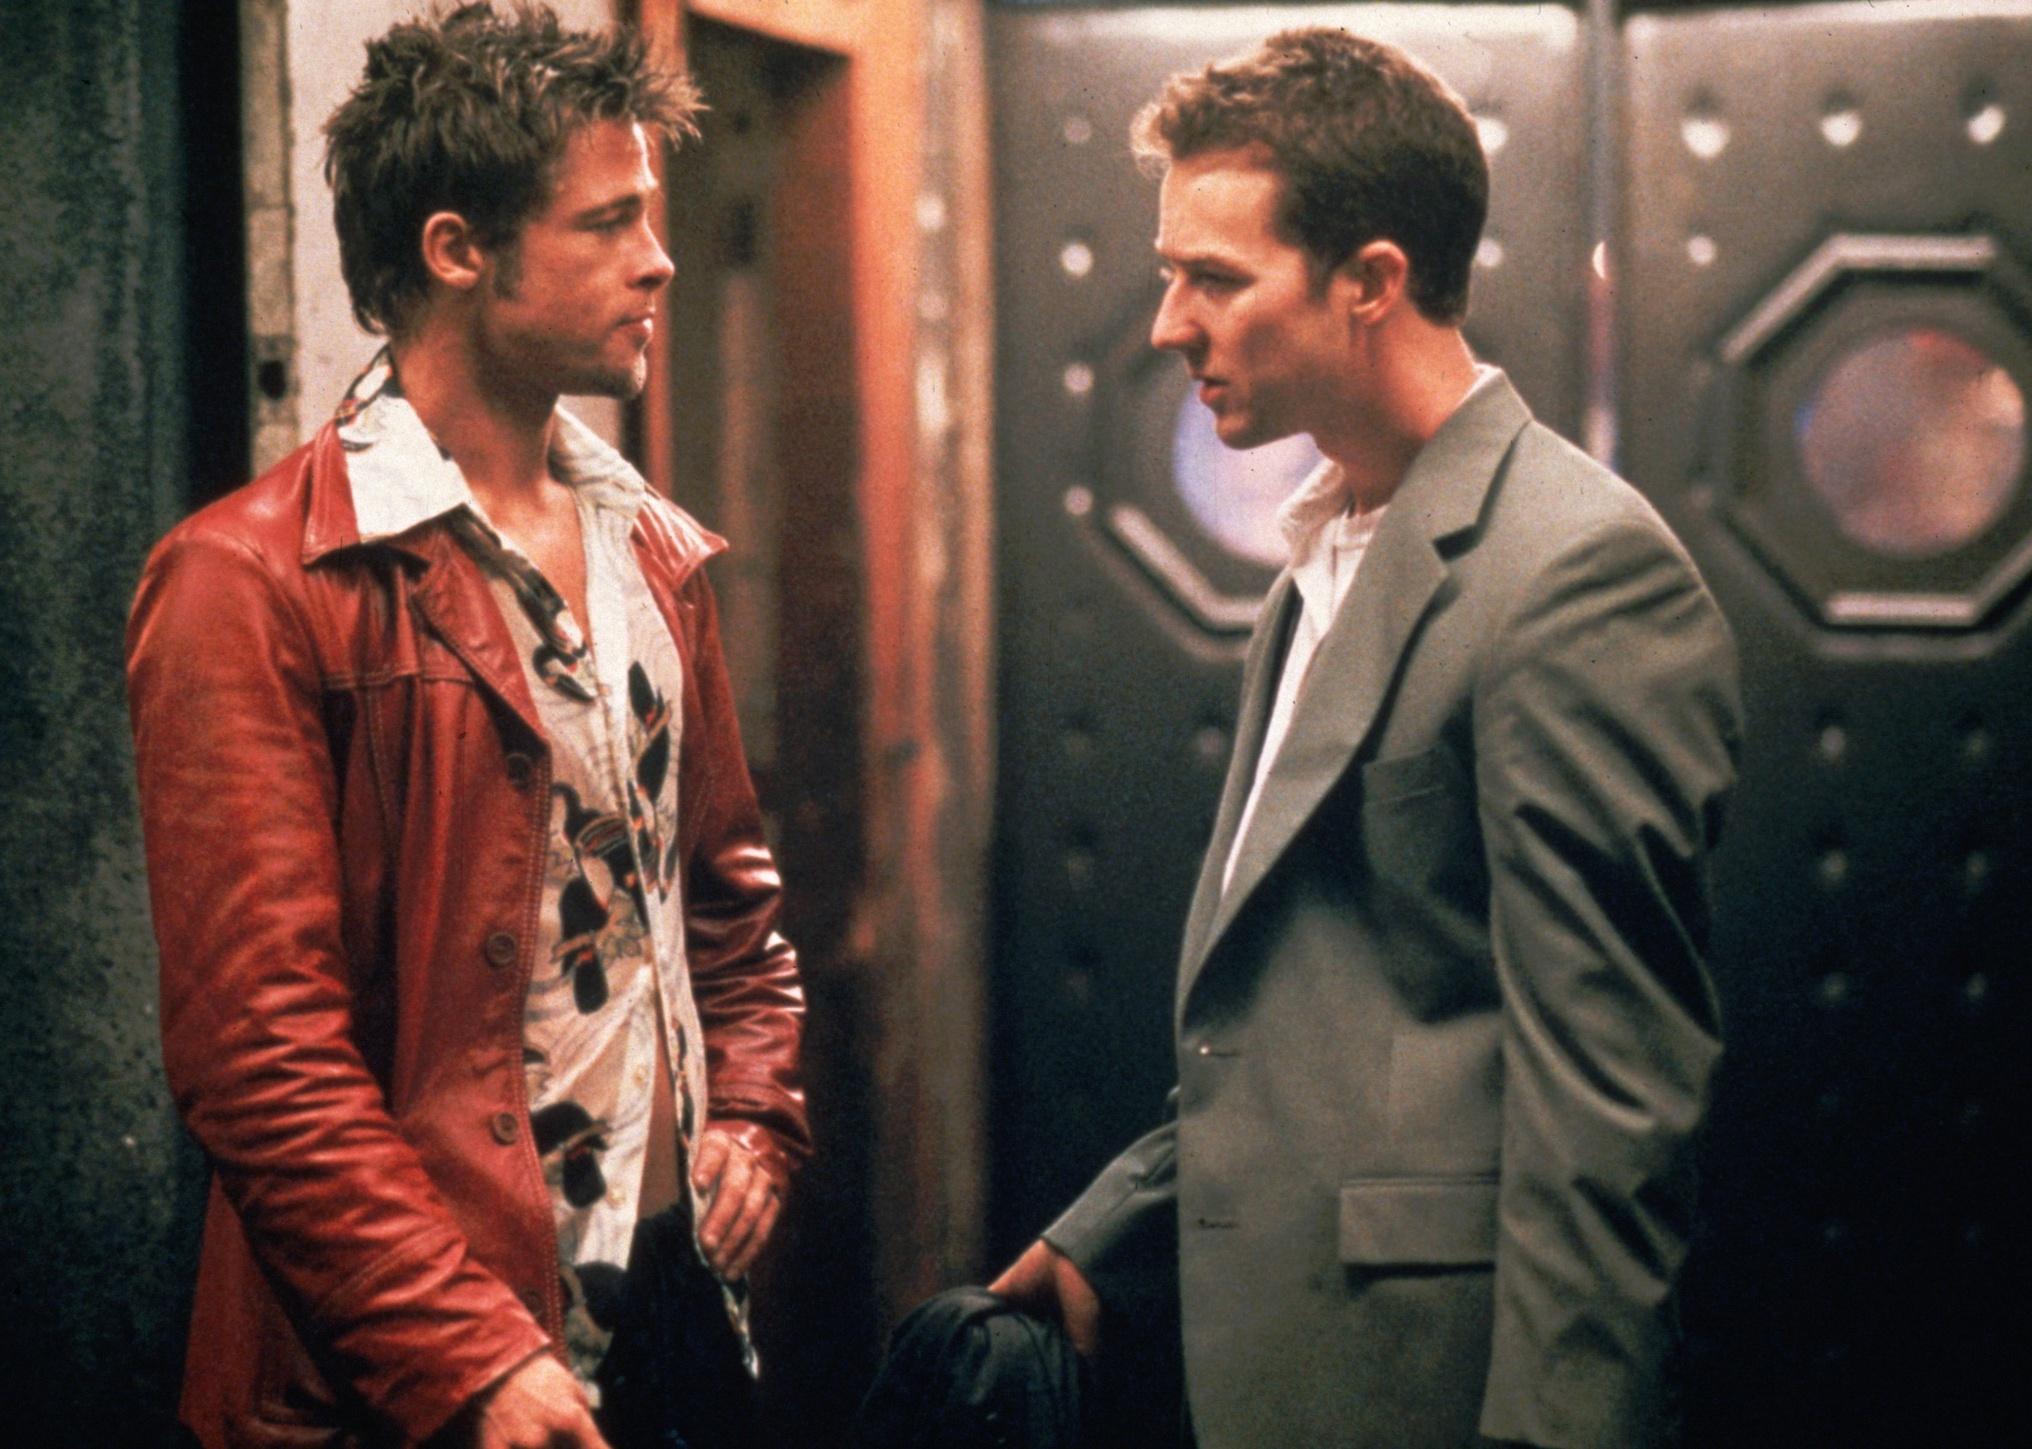 Brad Pitt in a leather jacket talking to Edward Norton.